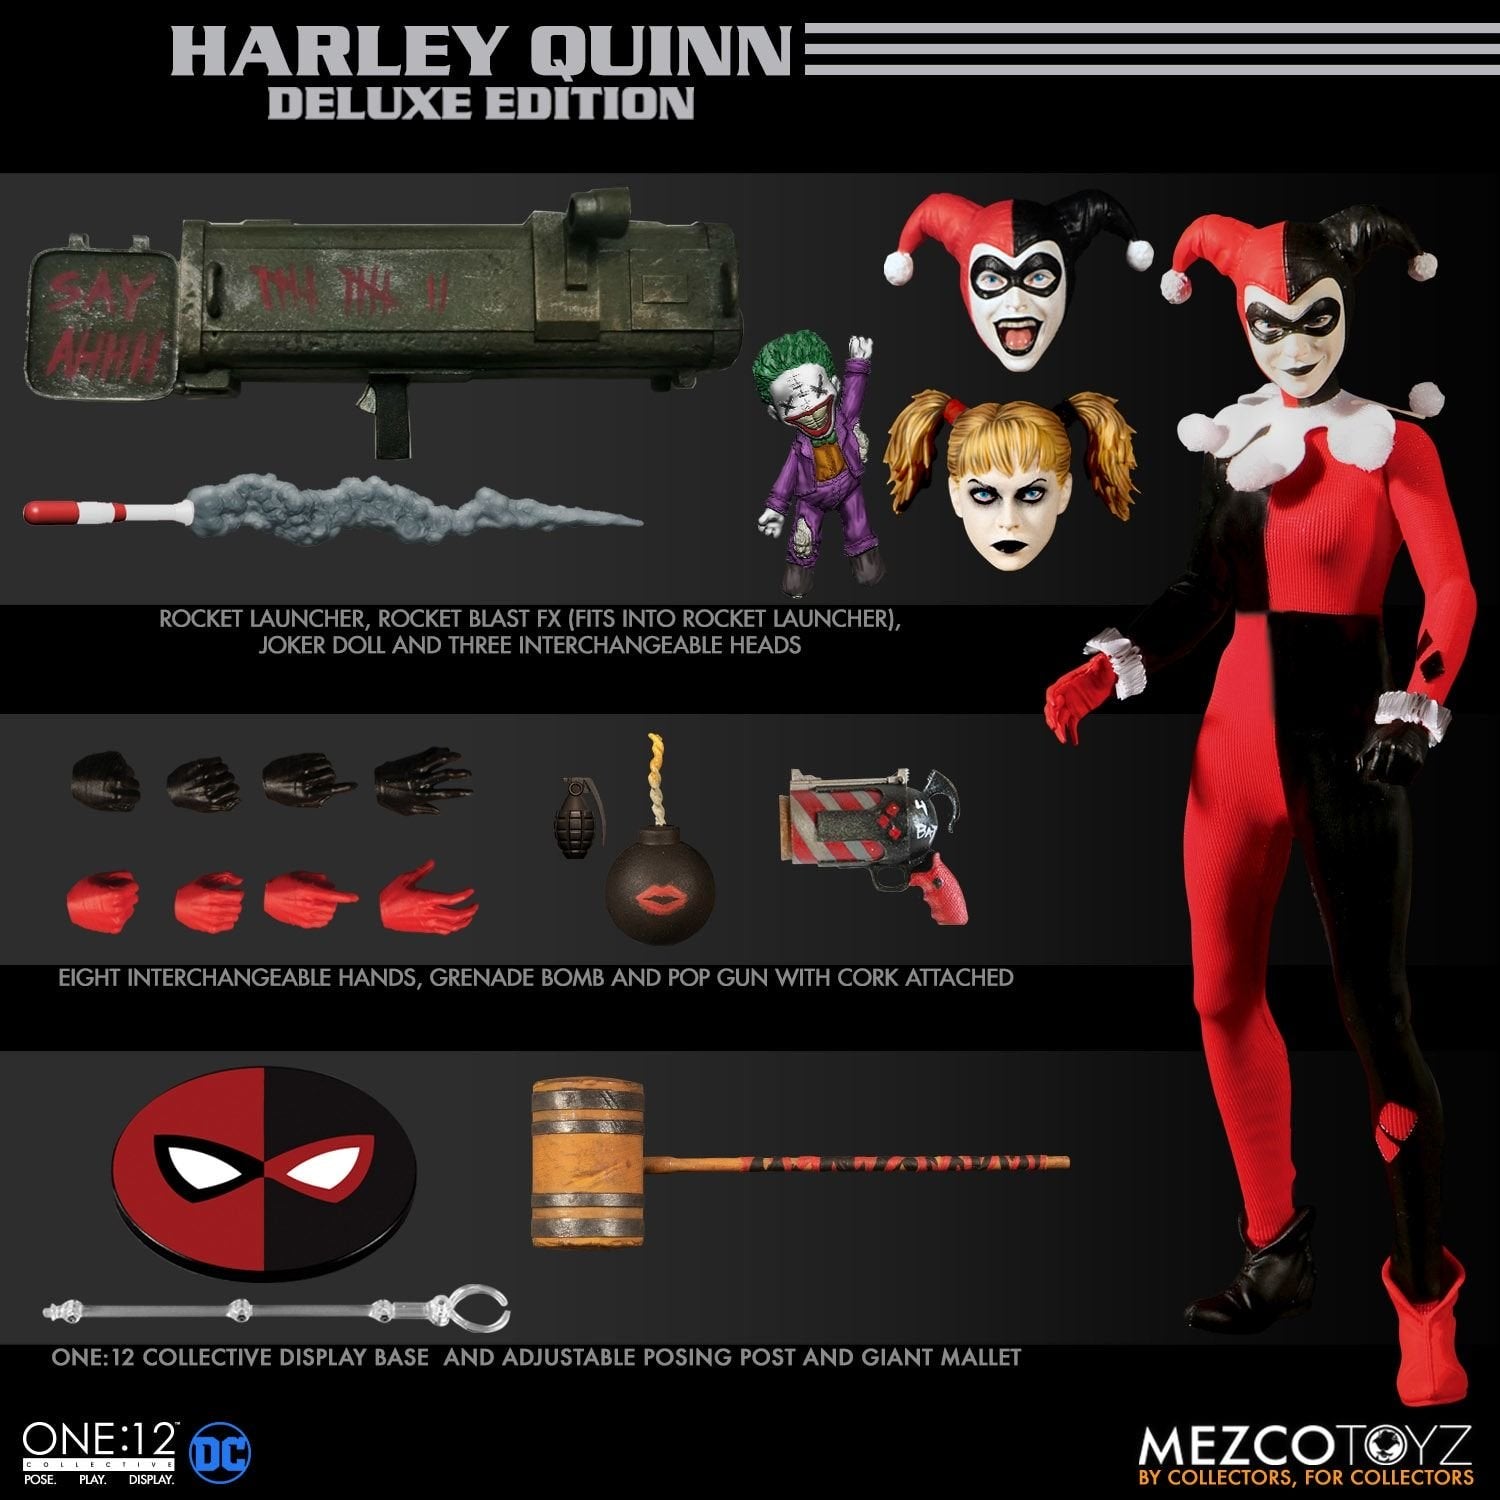 Mezco Toyz ONE:12 Collective Harely Quinn Deluxe Edition Action Figure